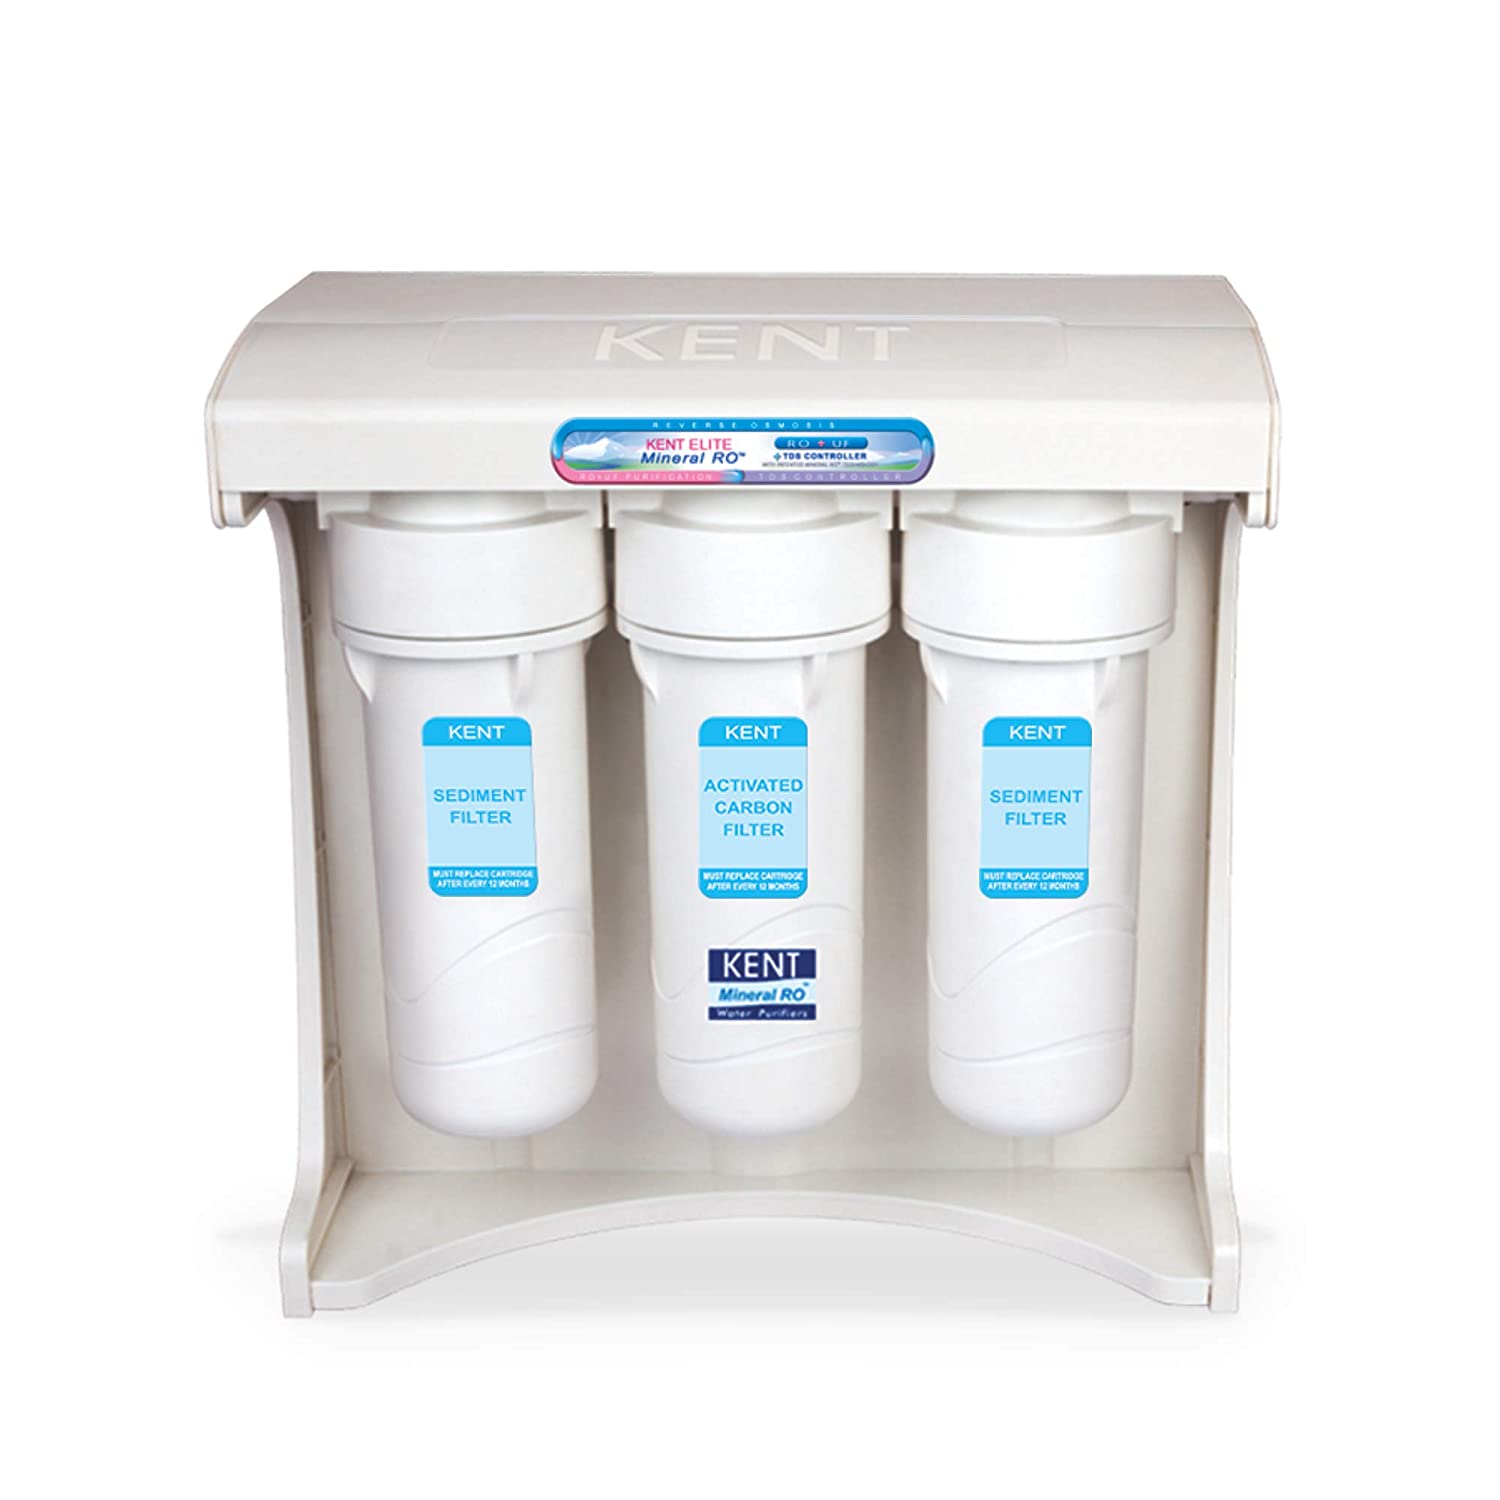 KENT Elite Plus Optional storage 20 litre Under the counter RO+UF+TDS Controller (White) 40-Ltr/hr Water Purifier - Mahajan Electronics Online